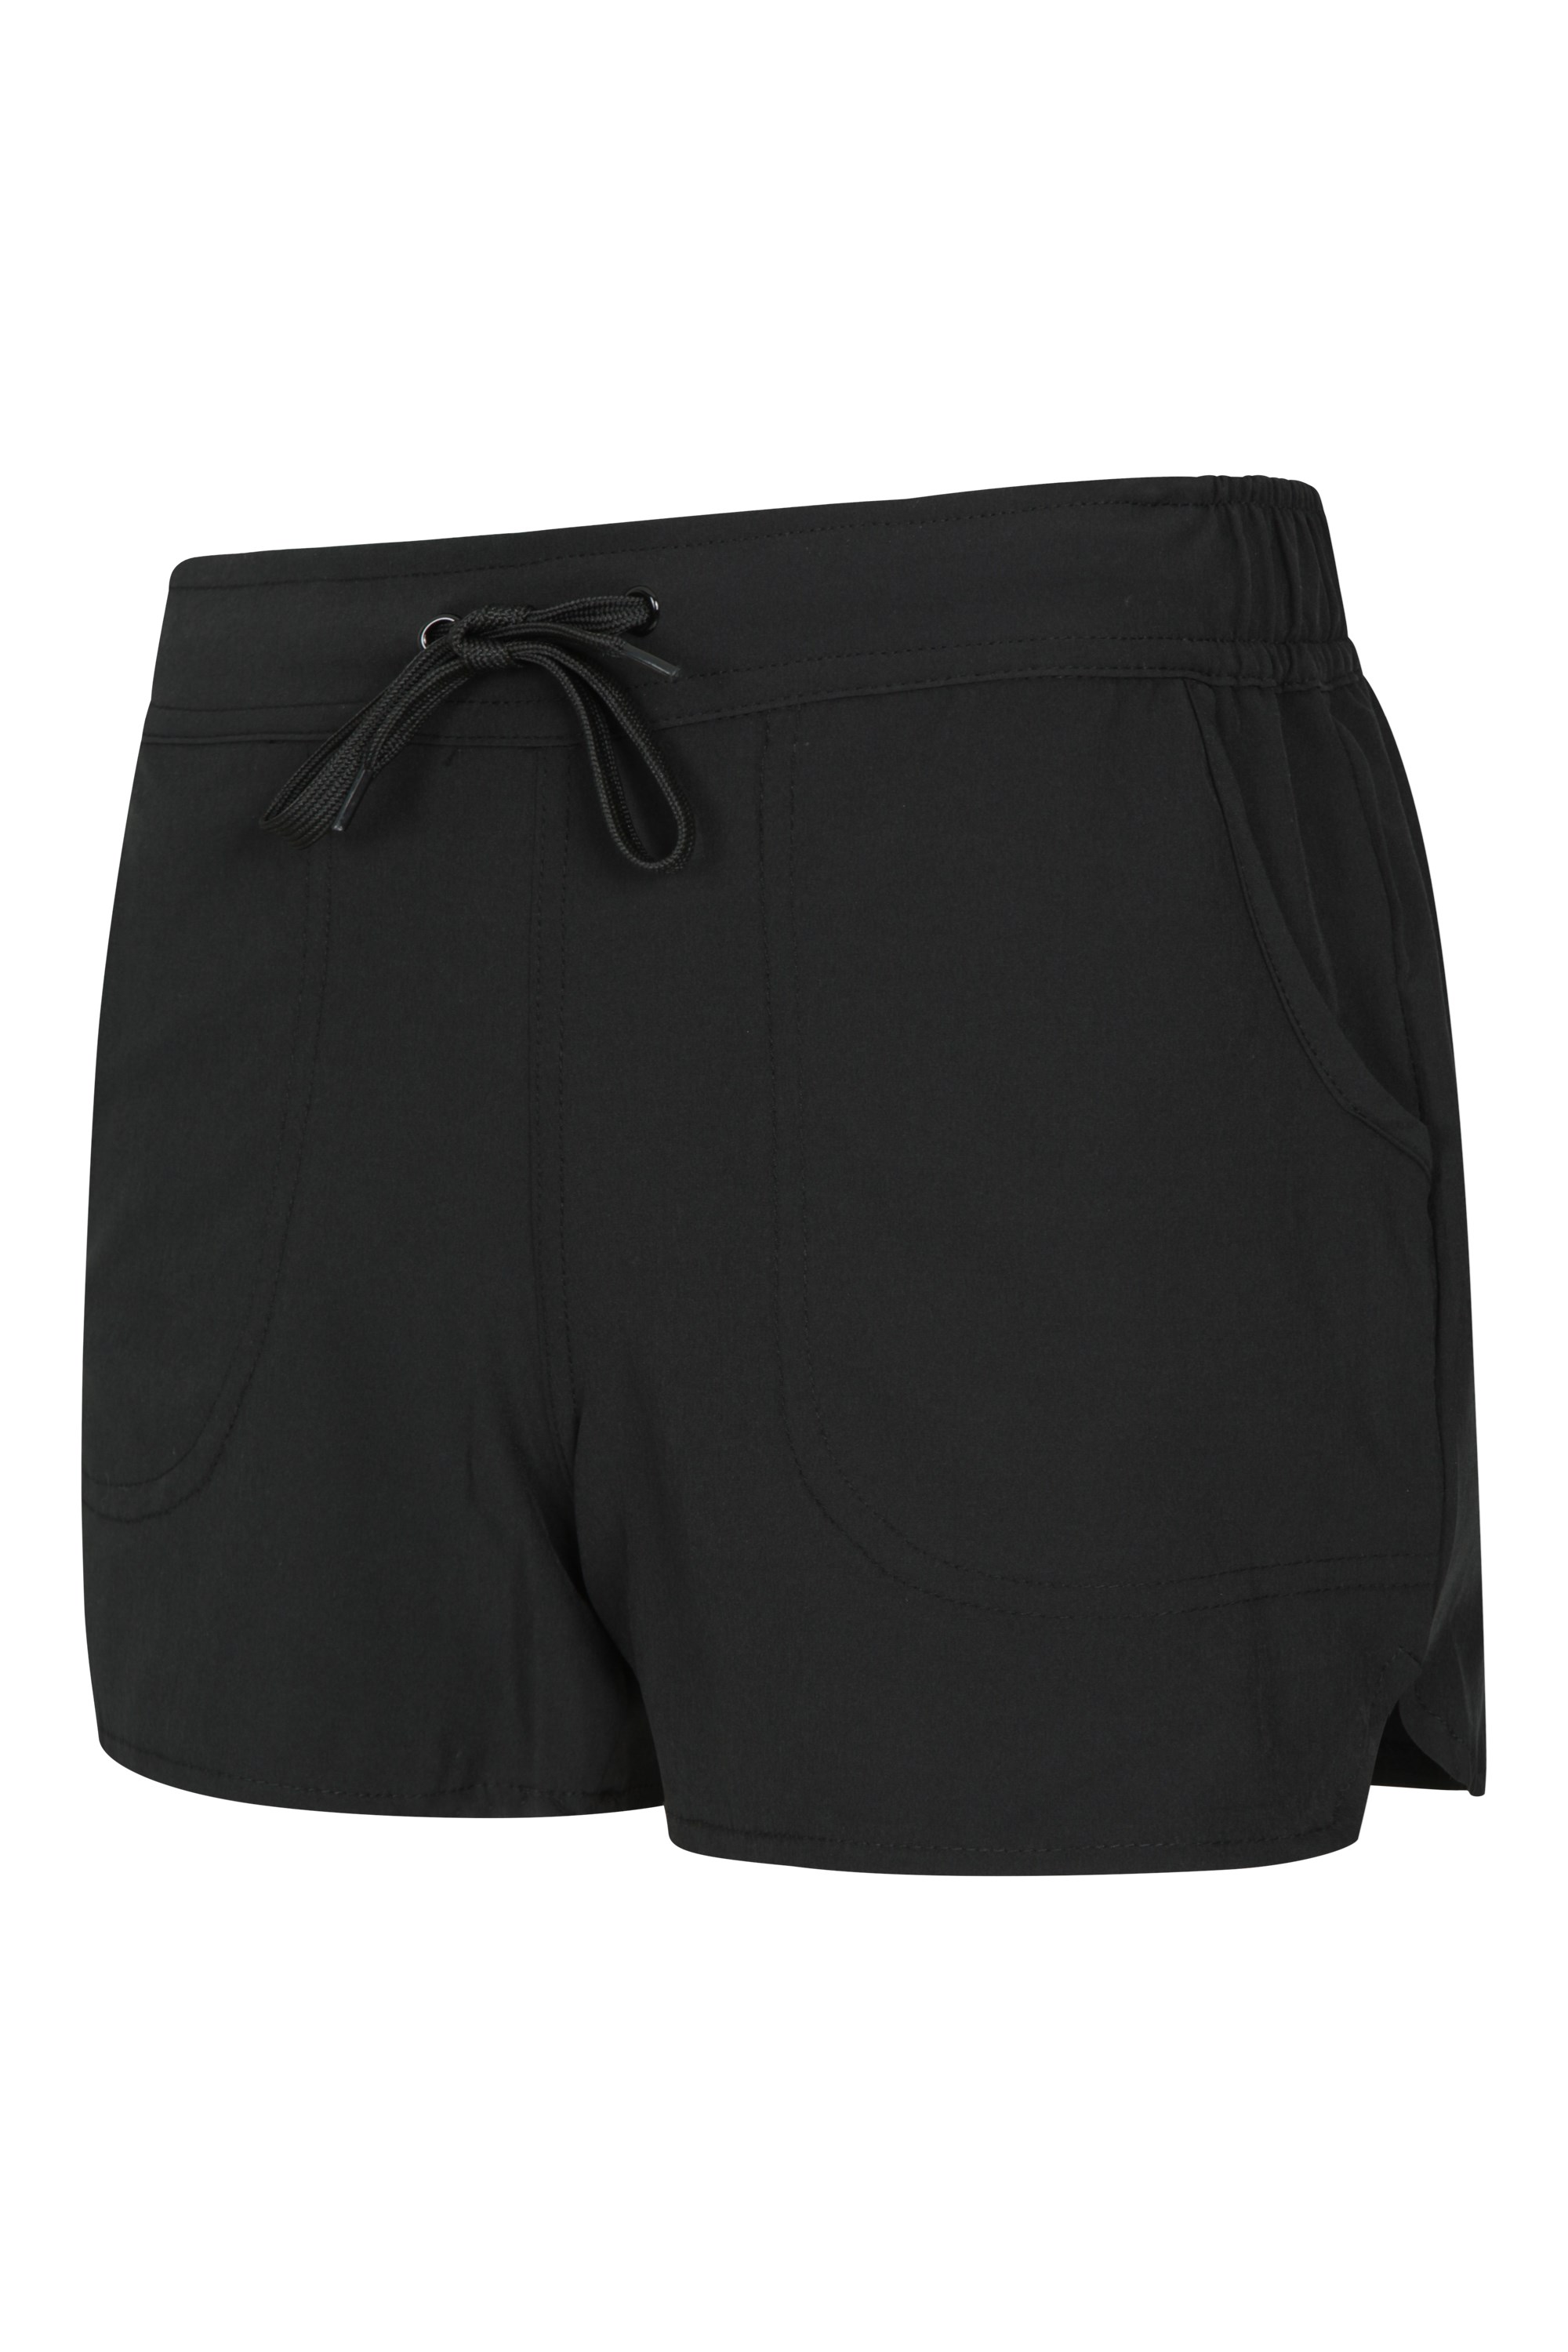 Mountain Warehouse Wms Womens Quick Dry Stretch Long Boardshort Beach Shorts 